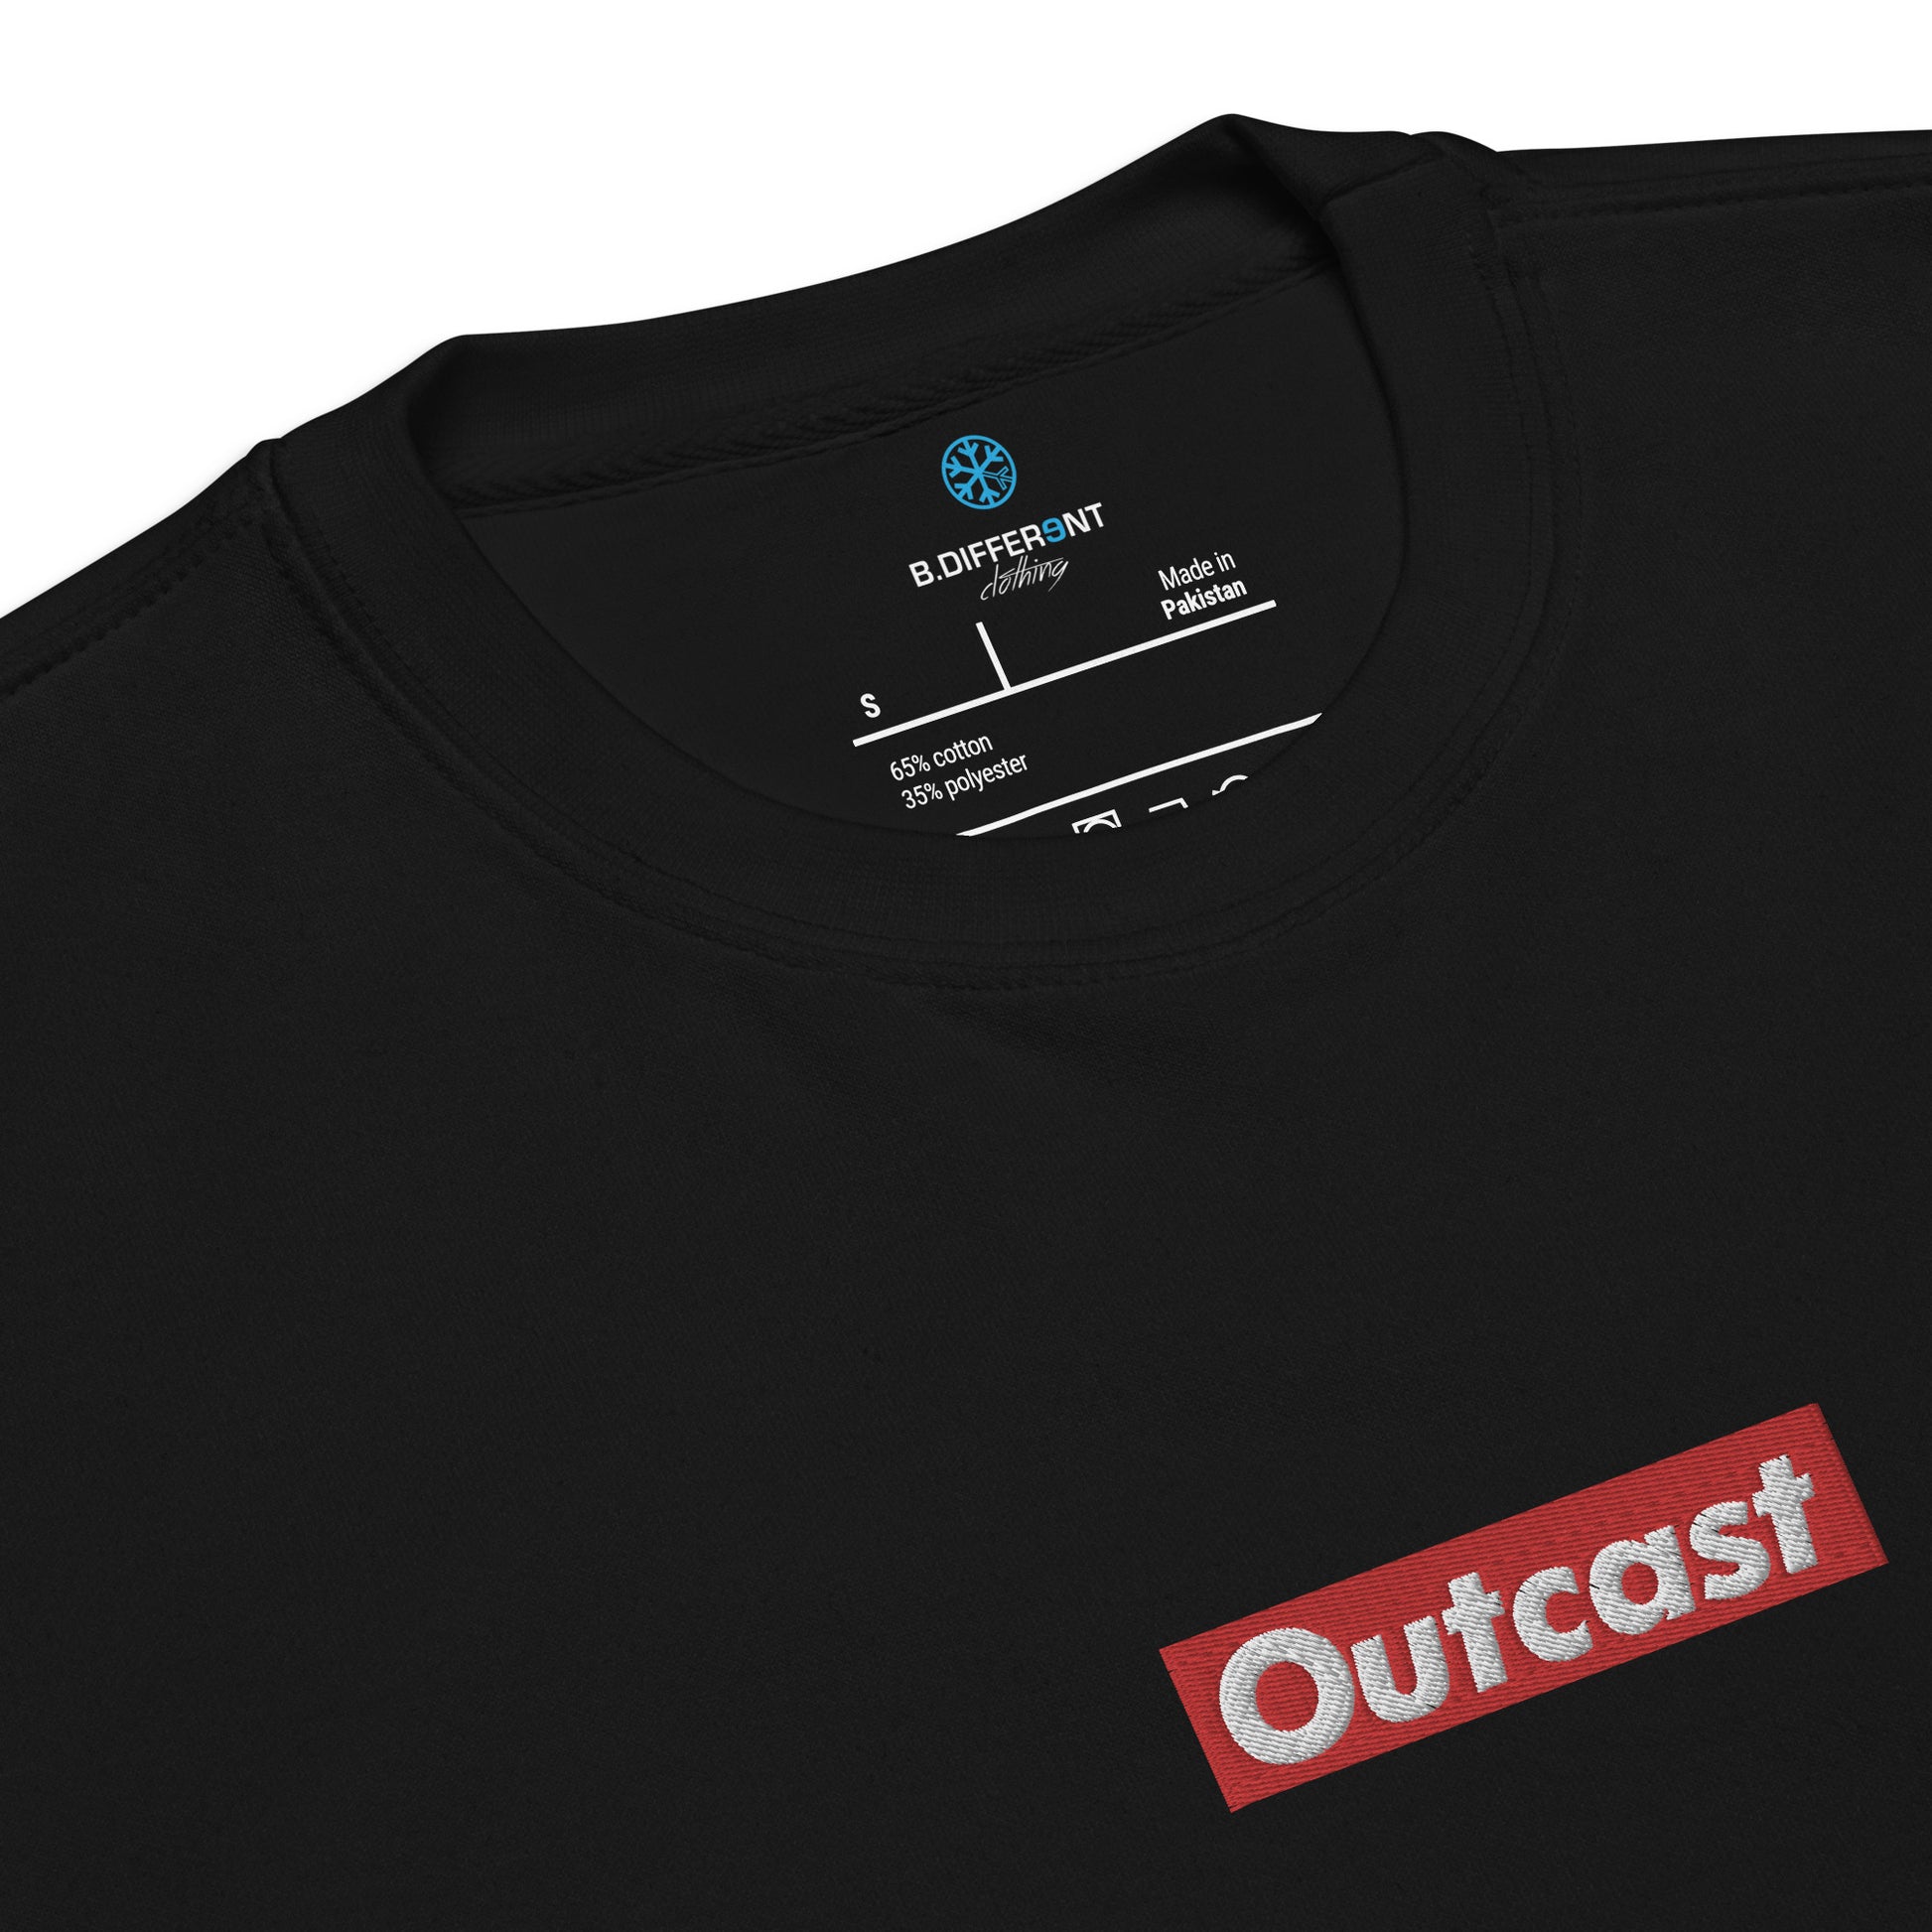 collar  Outcast box sweatshirt b.different clothing street art graffiti inspired independent streetwear